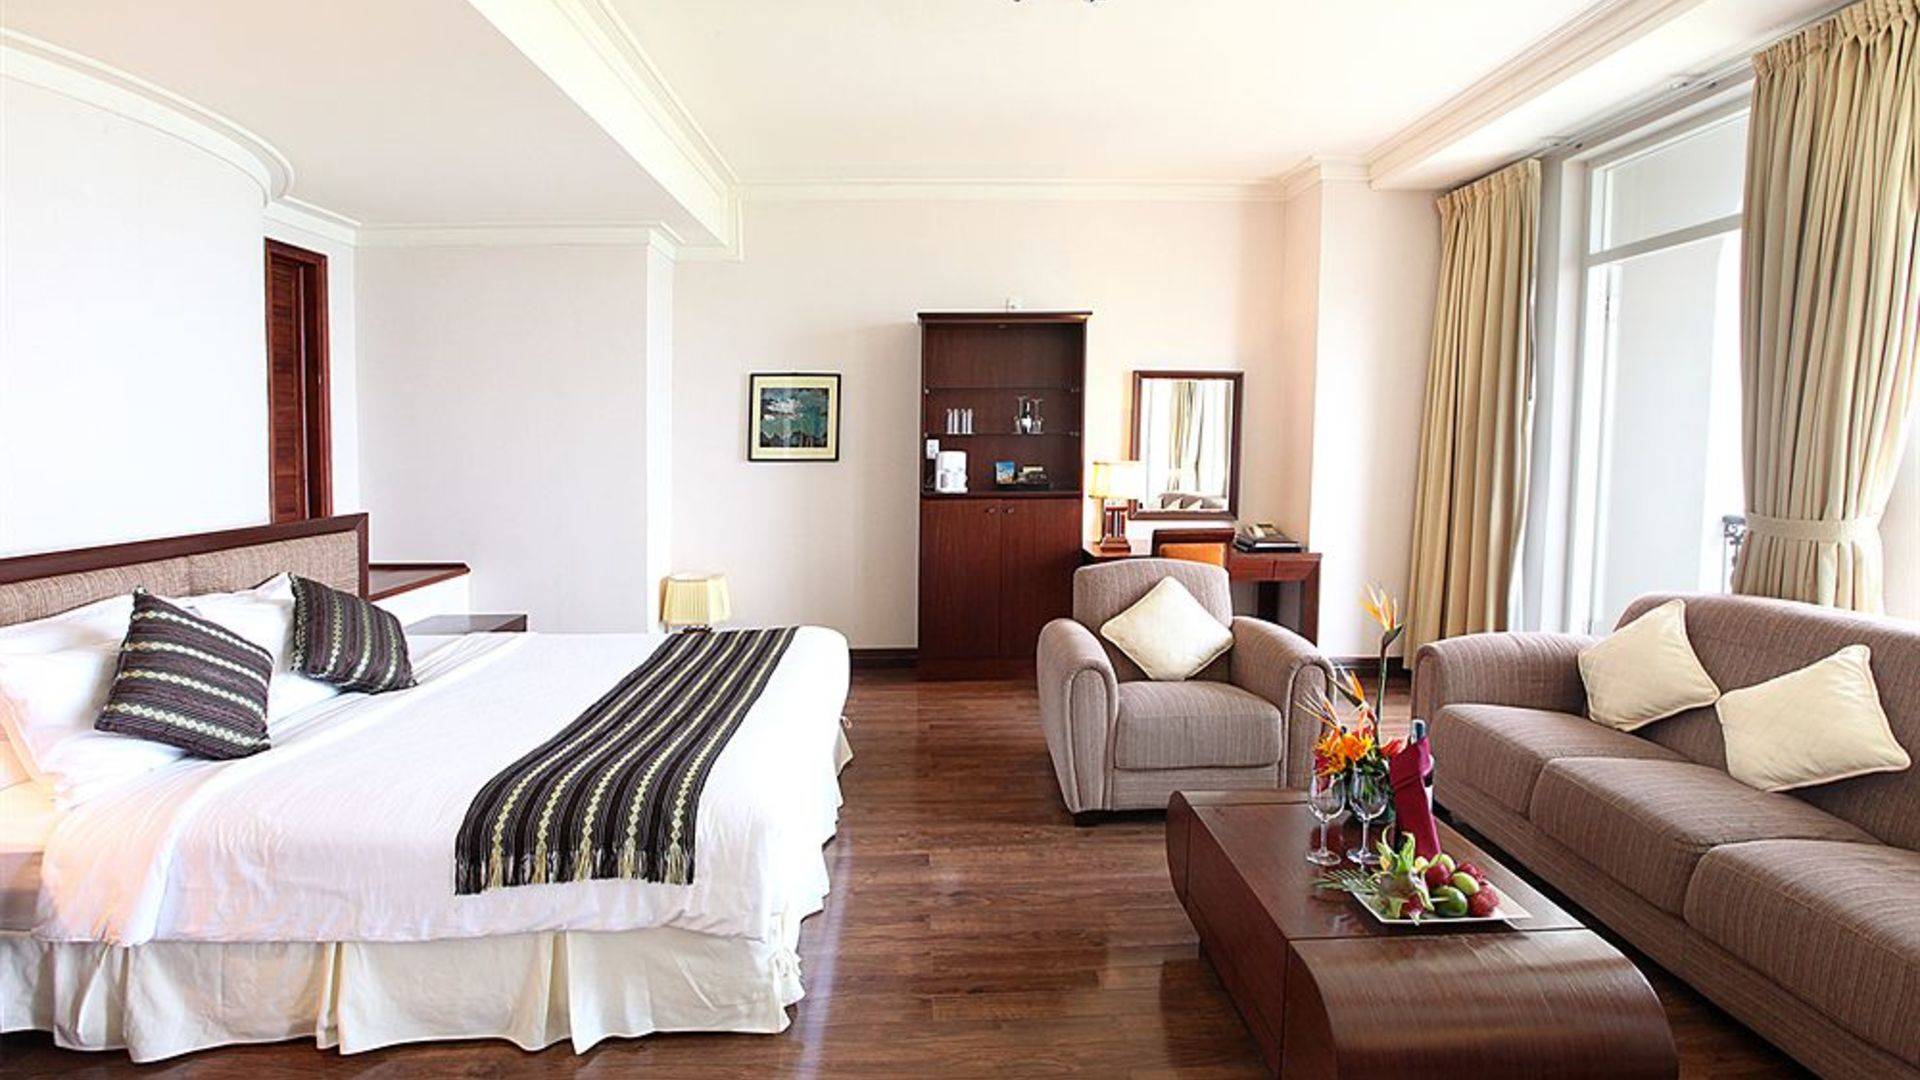 Sunrise nha trang beach hotel & spa 5* - вьетнам, кханьхоа - отели | пегас туристик